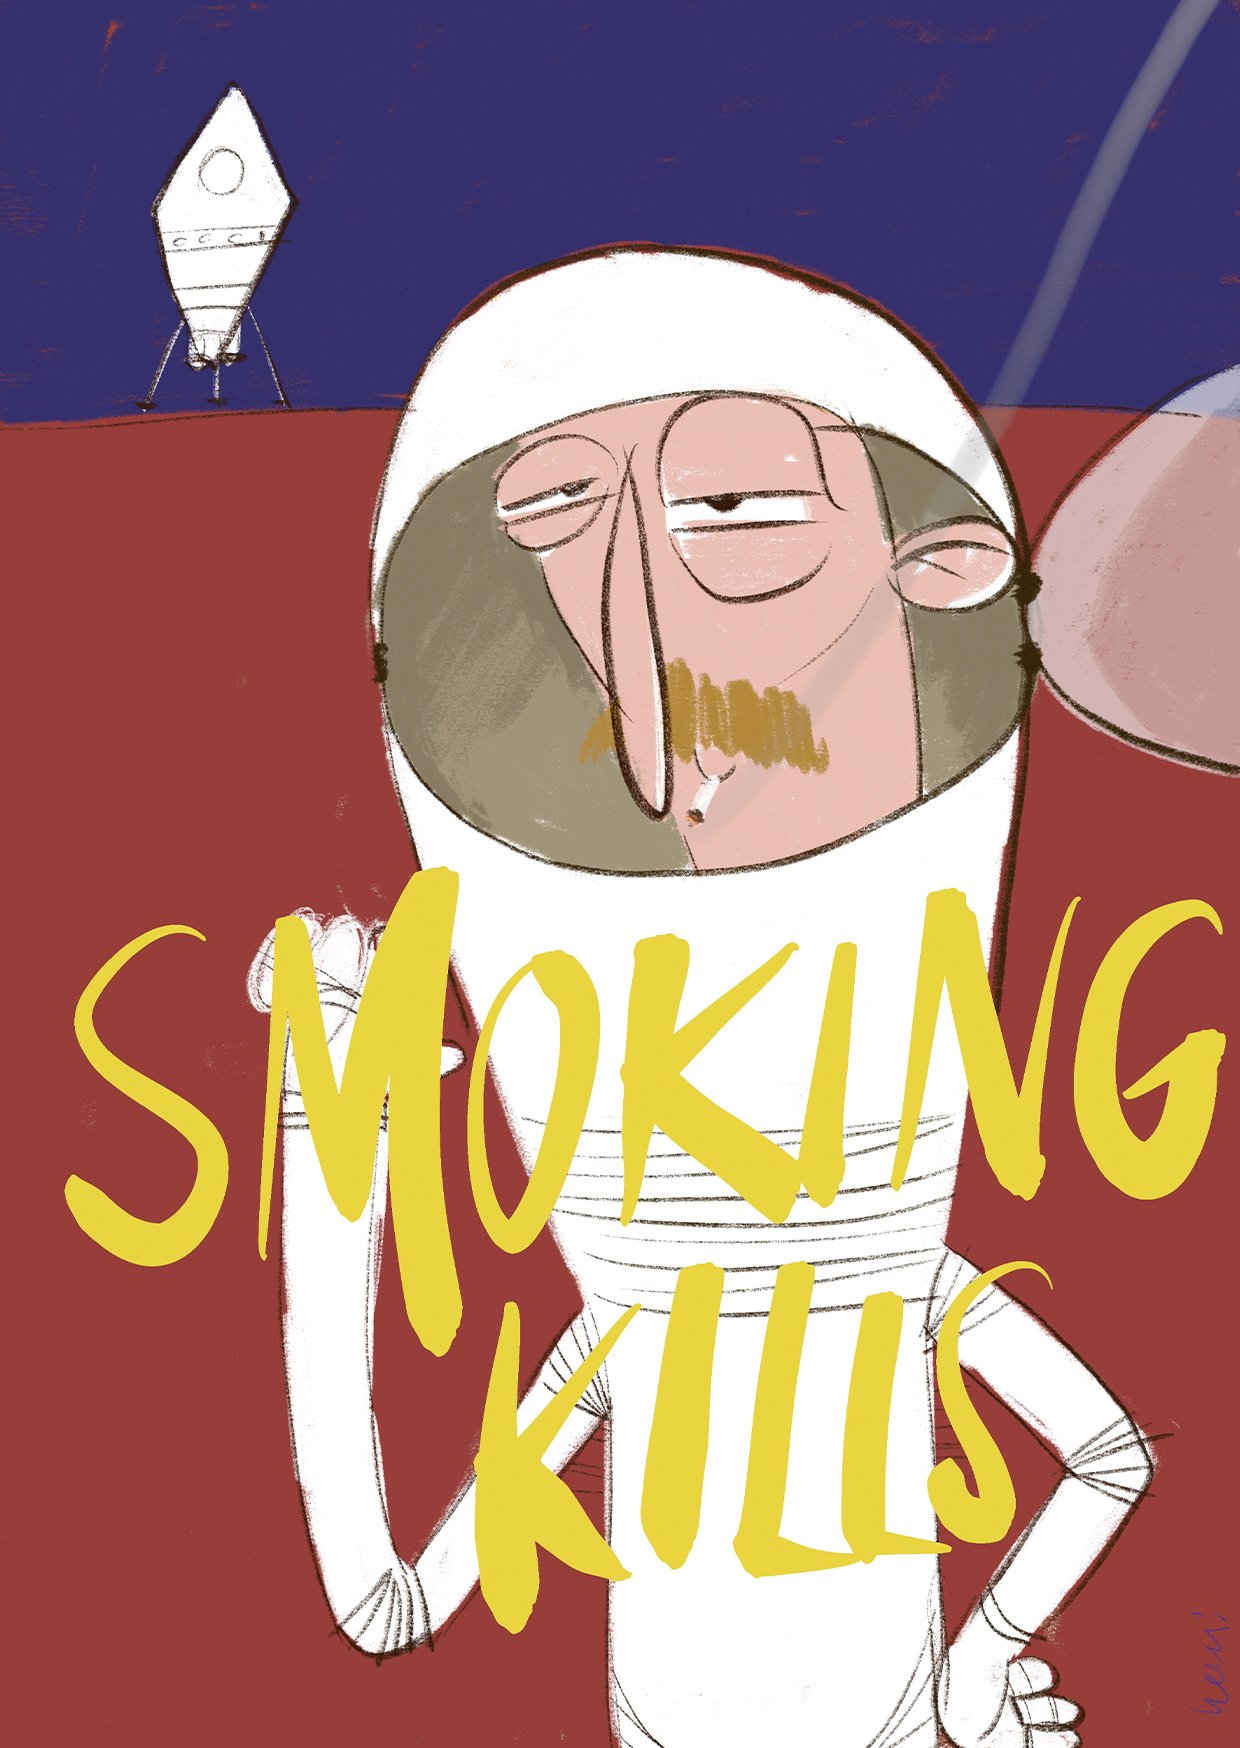 Illupage-Patrick-Heusi-Illustration-Smoking Kills.jpg